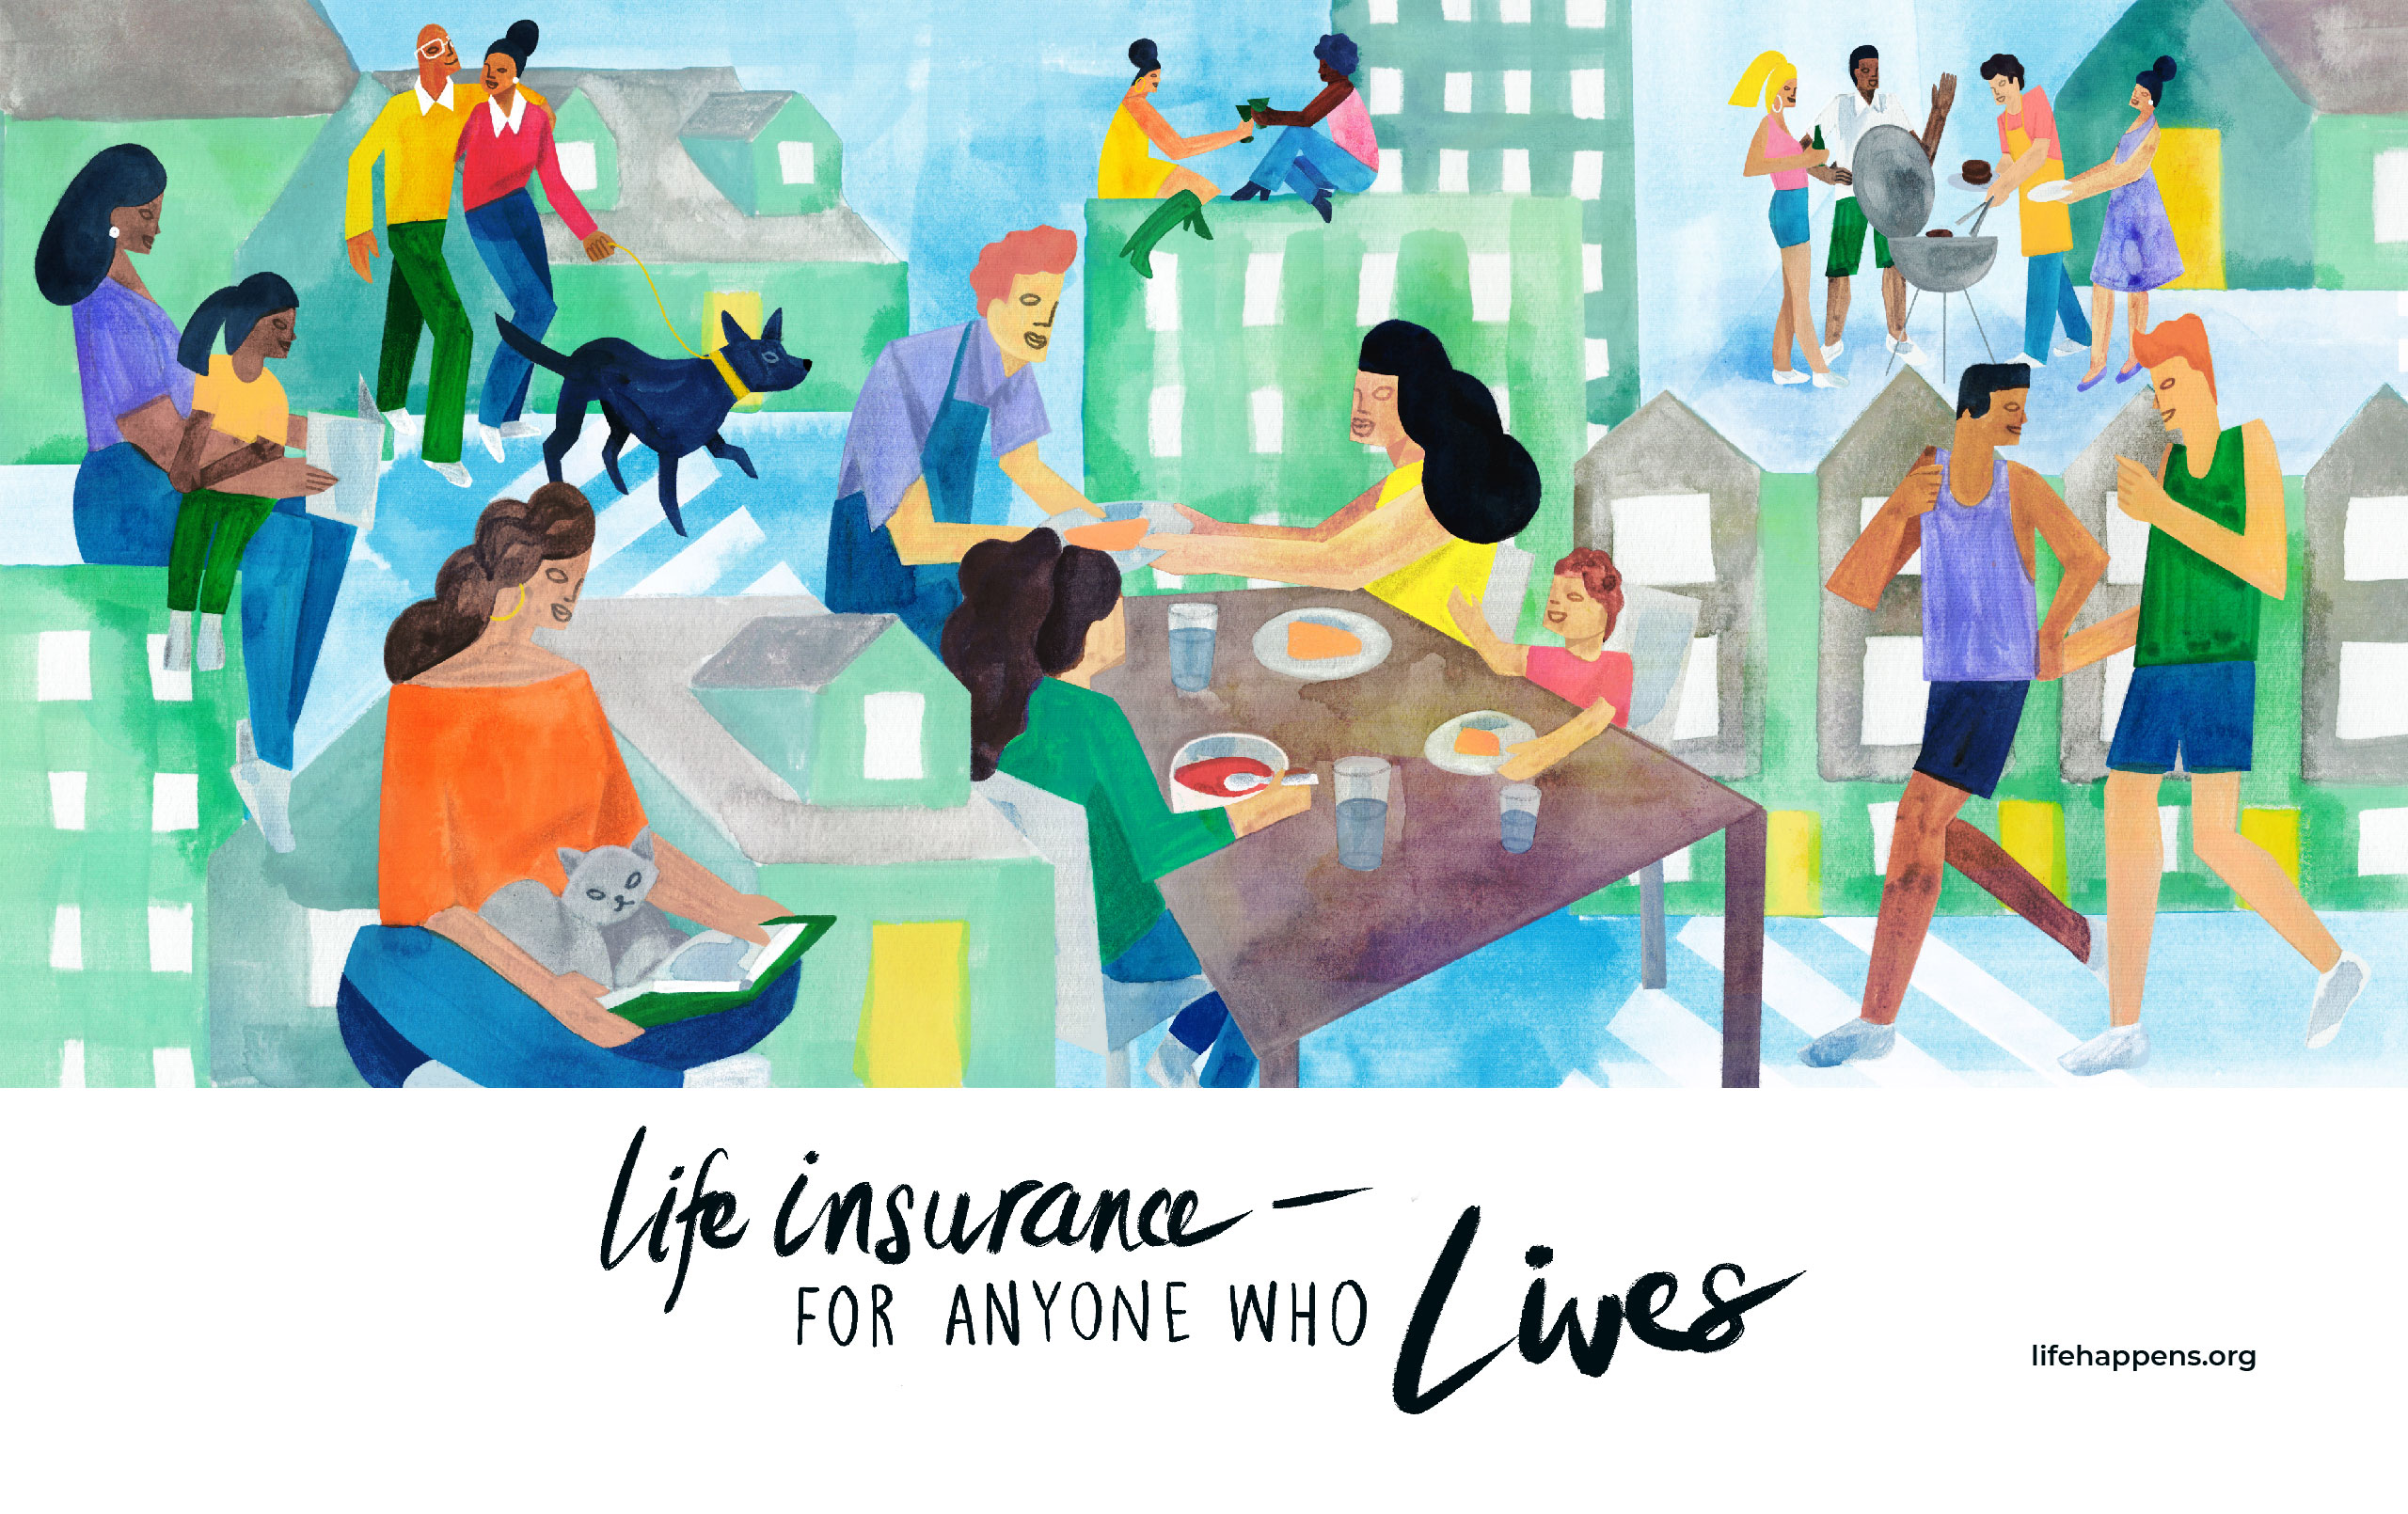 Sirin Thada's artwork "Life Insurance: For Anyone Who Lives"